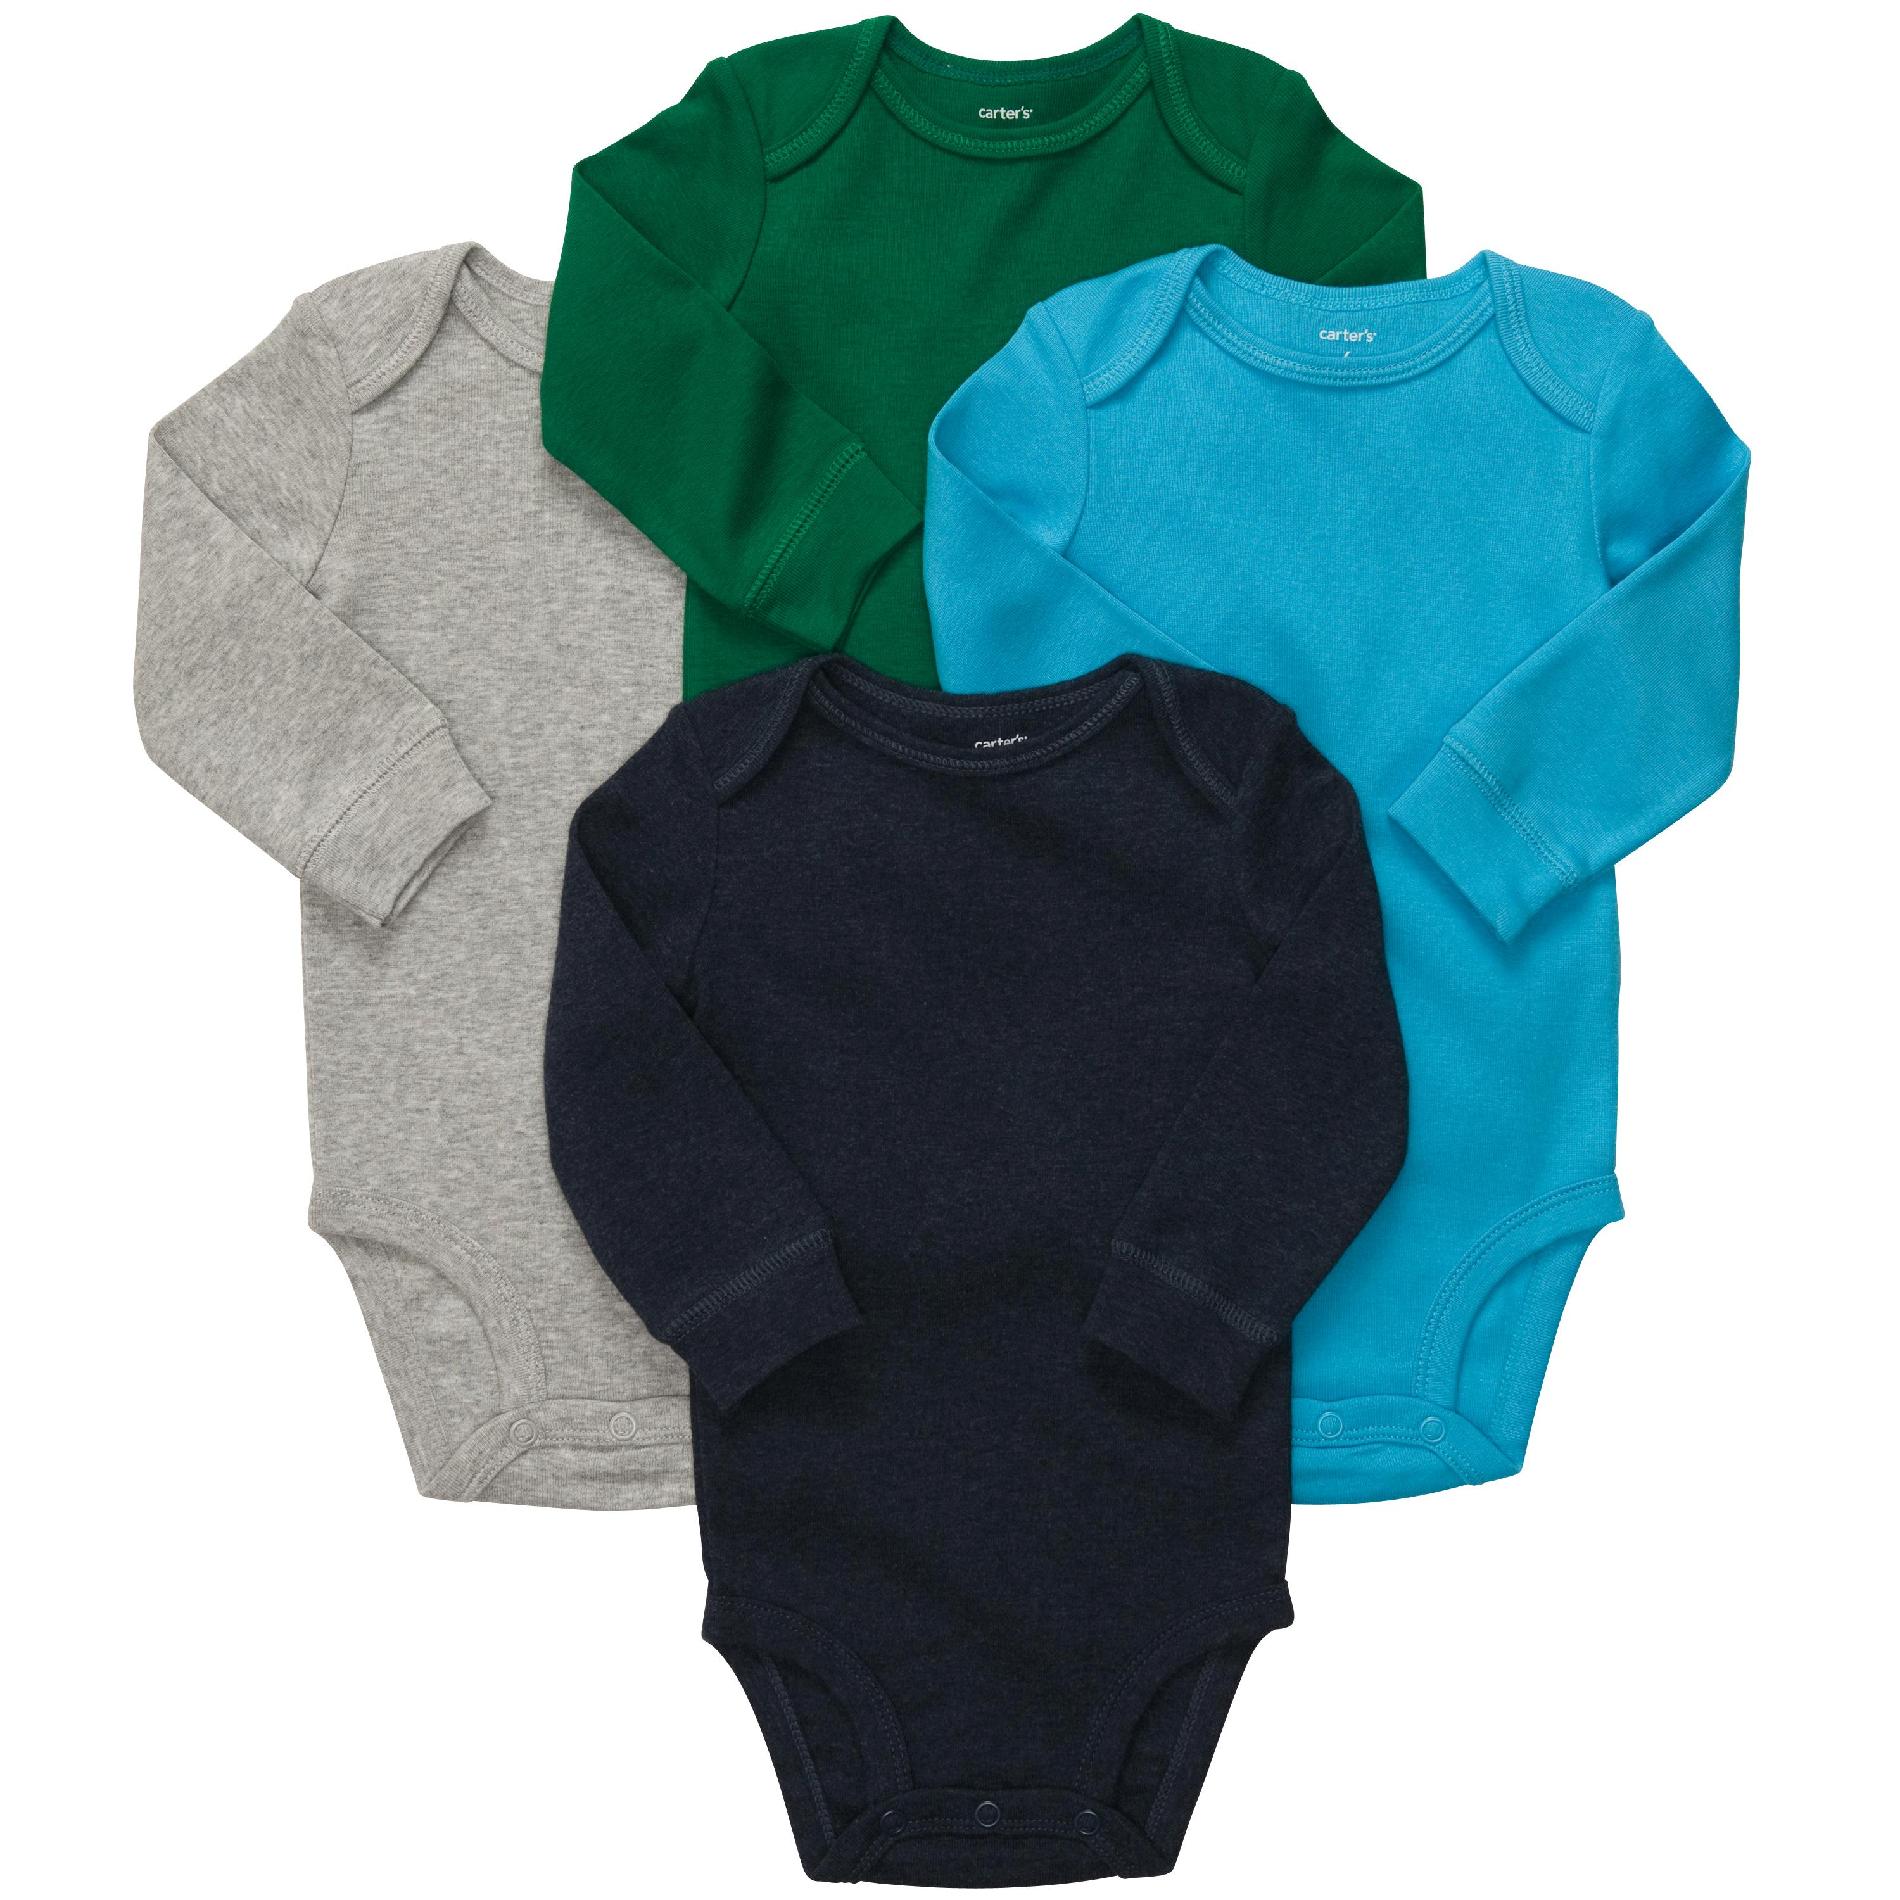 Carter's Newborn & Infant Boy's Bodysuits - 4 Pack